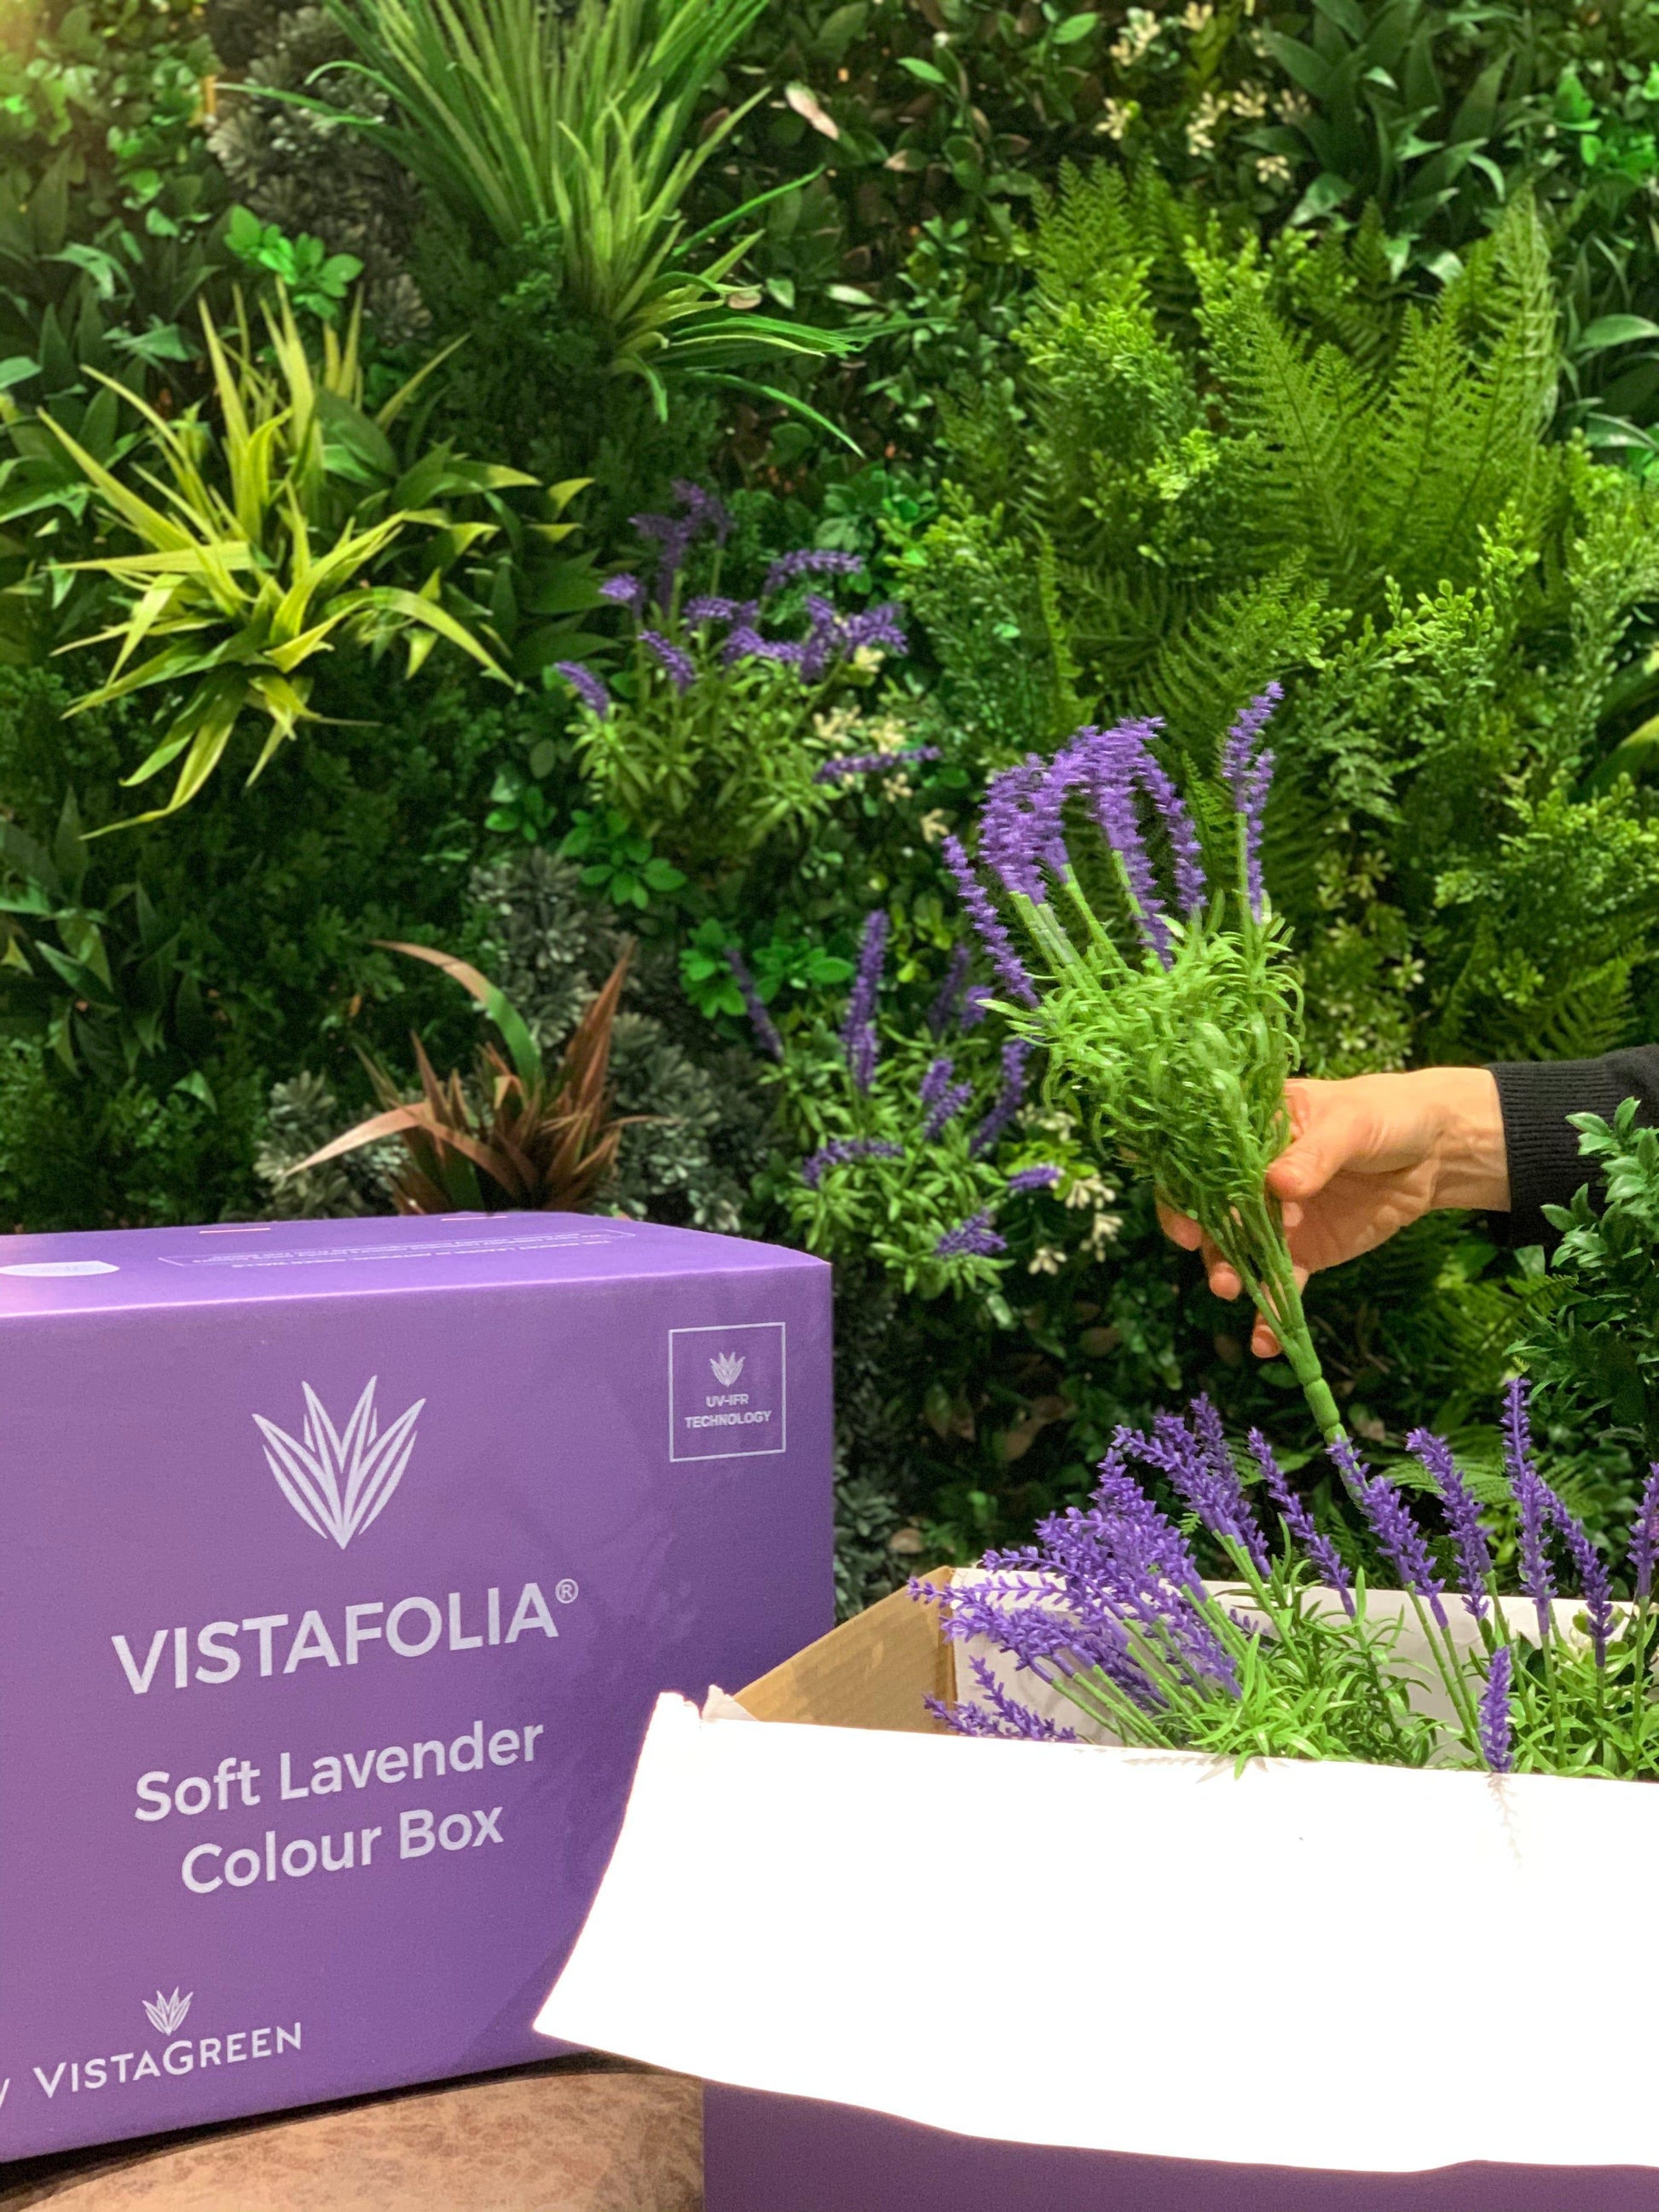 Vistafolia Faux Foliage Colour Boxes - Garden House Design